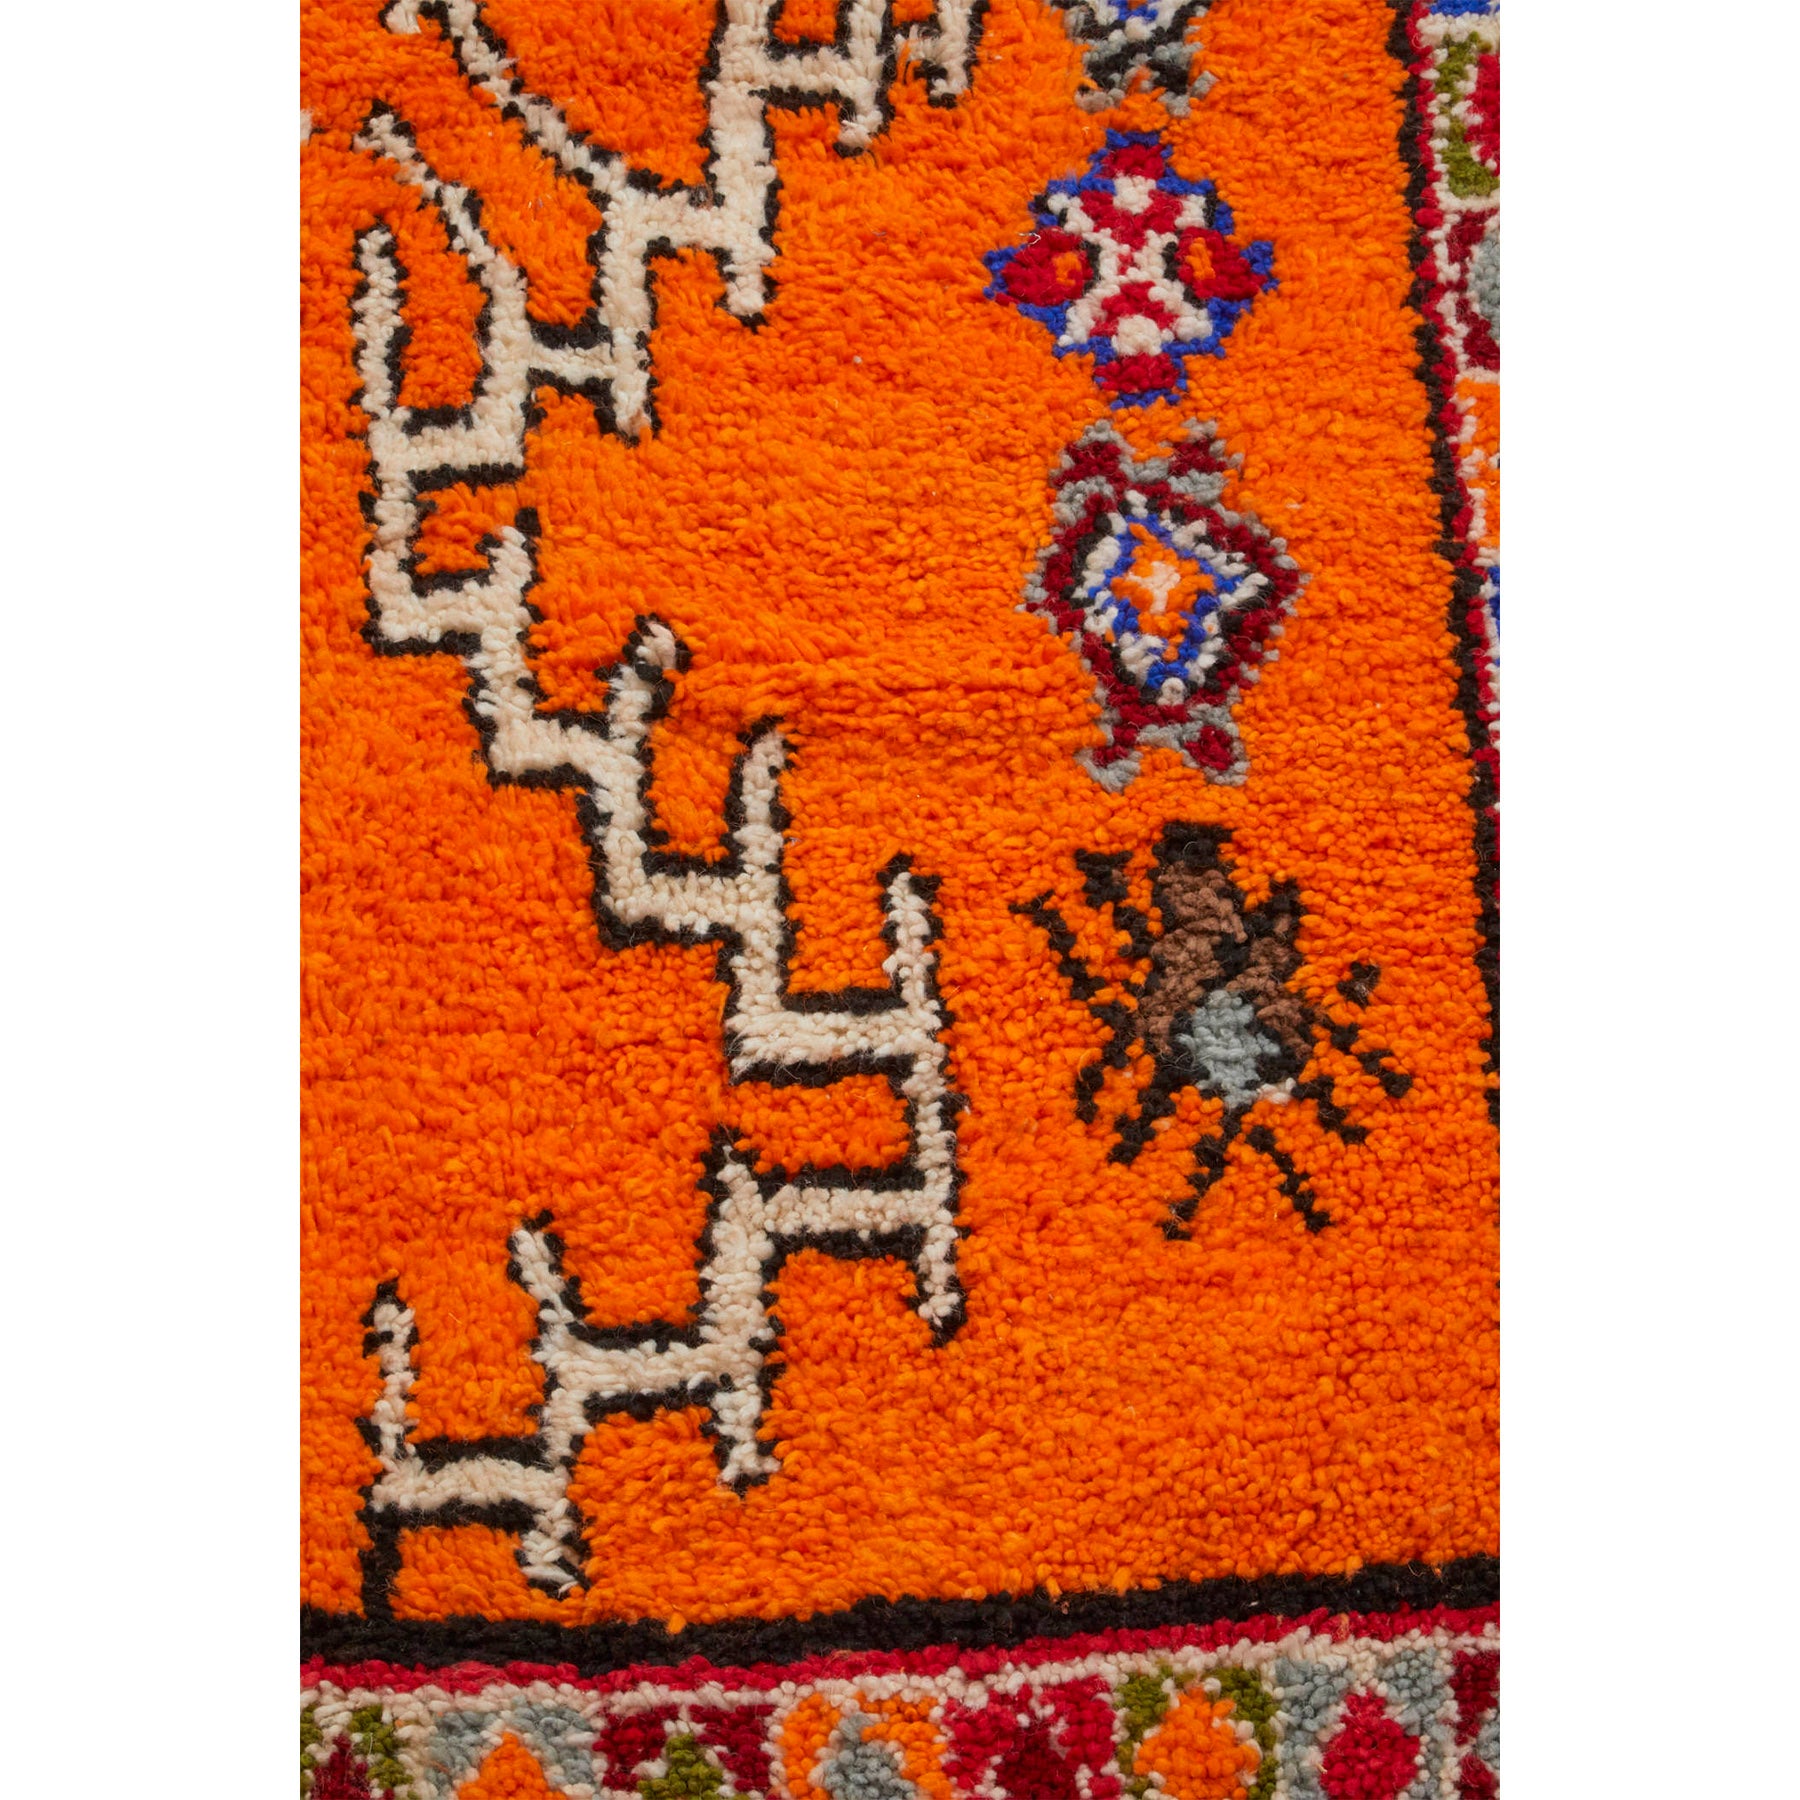 Handknotted artisan made orange tribal Moroccan Azilal rug - Kantara | Moroccan Rugs